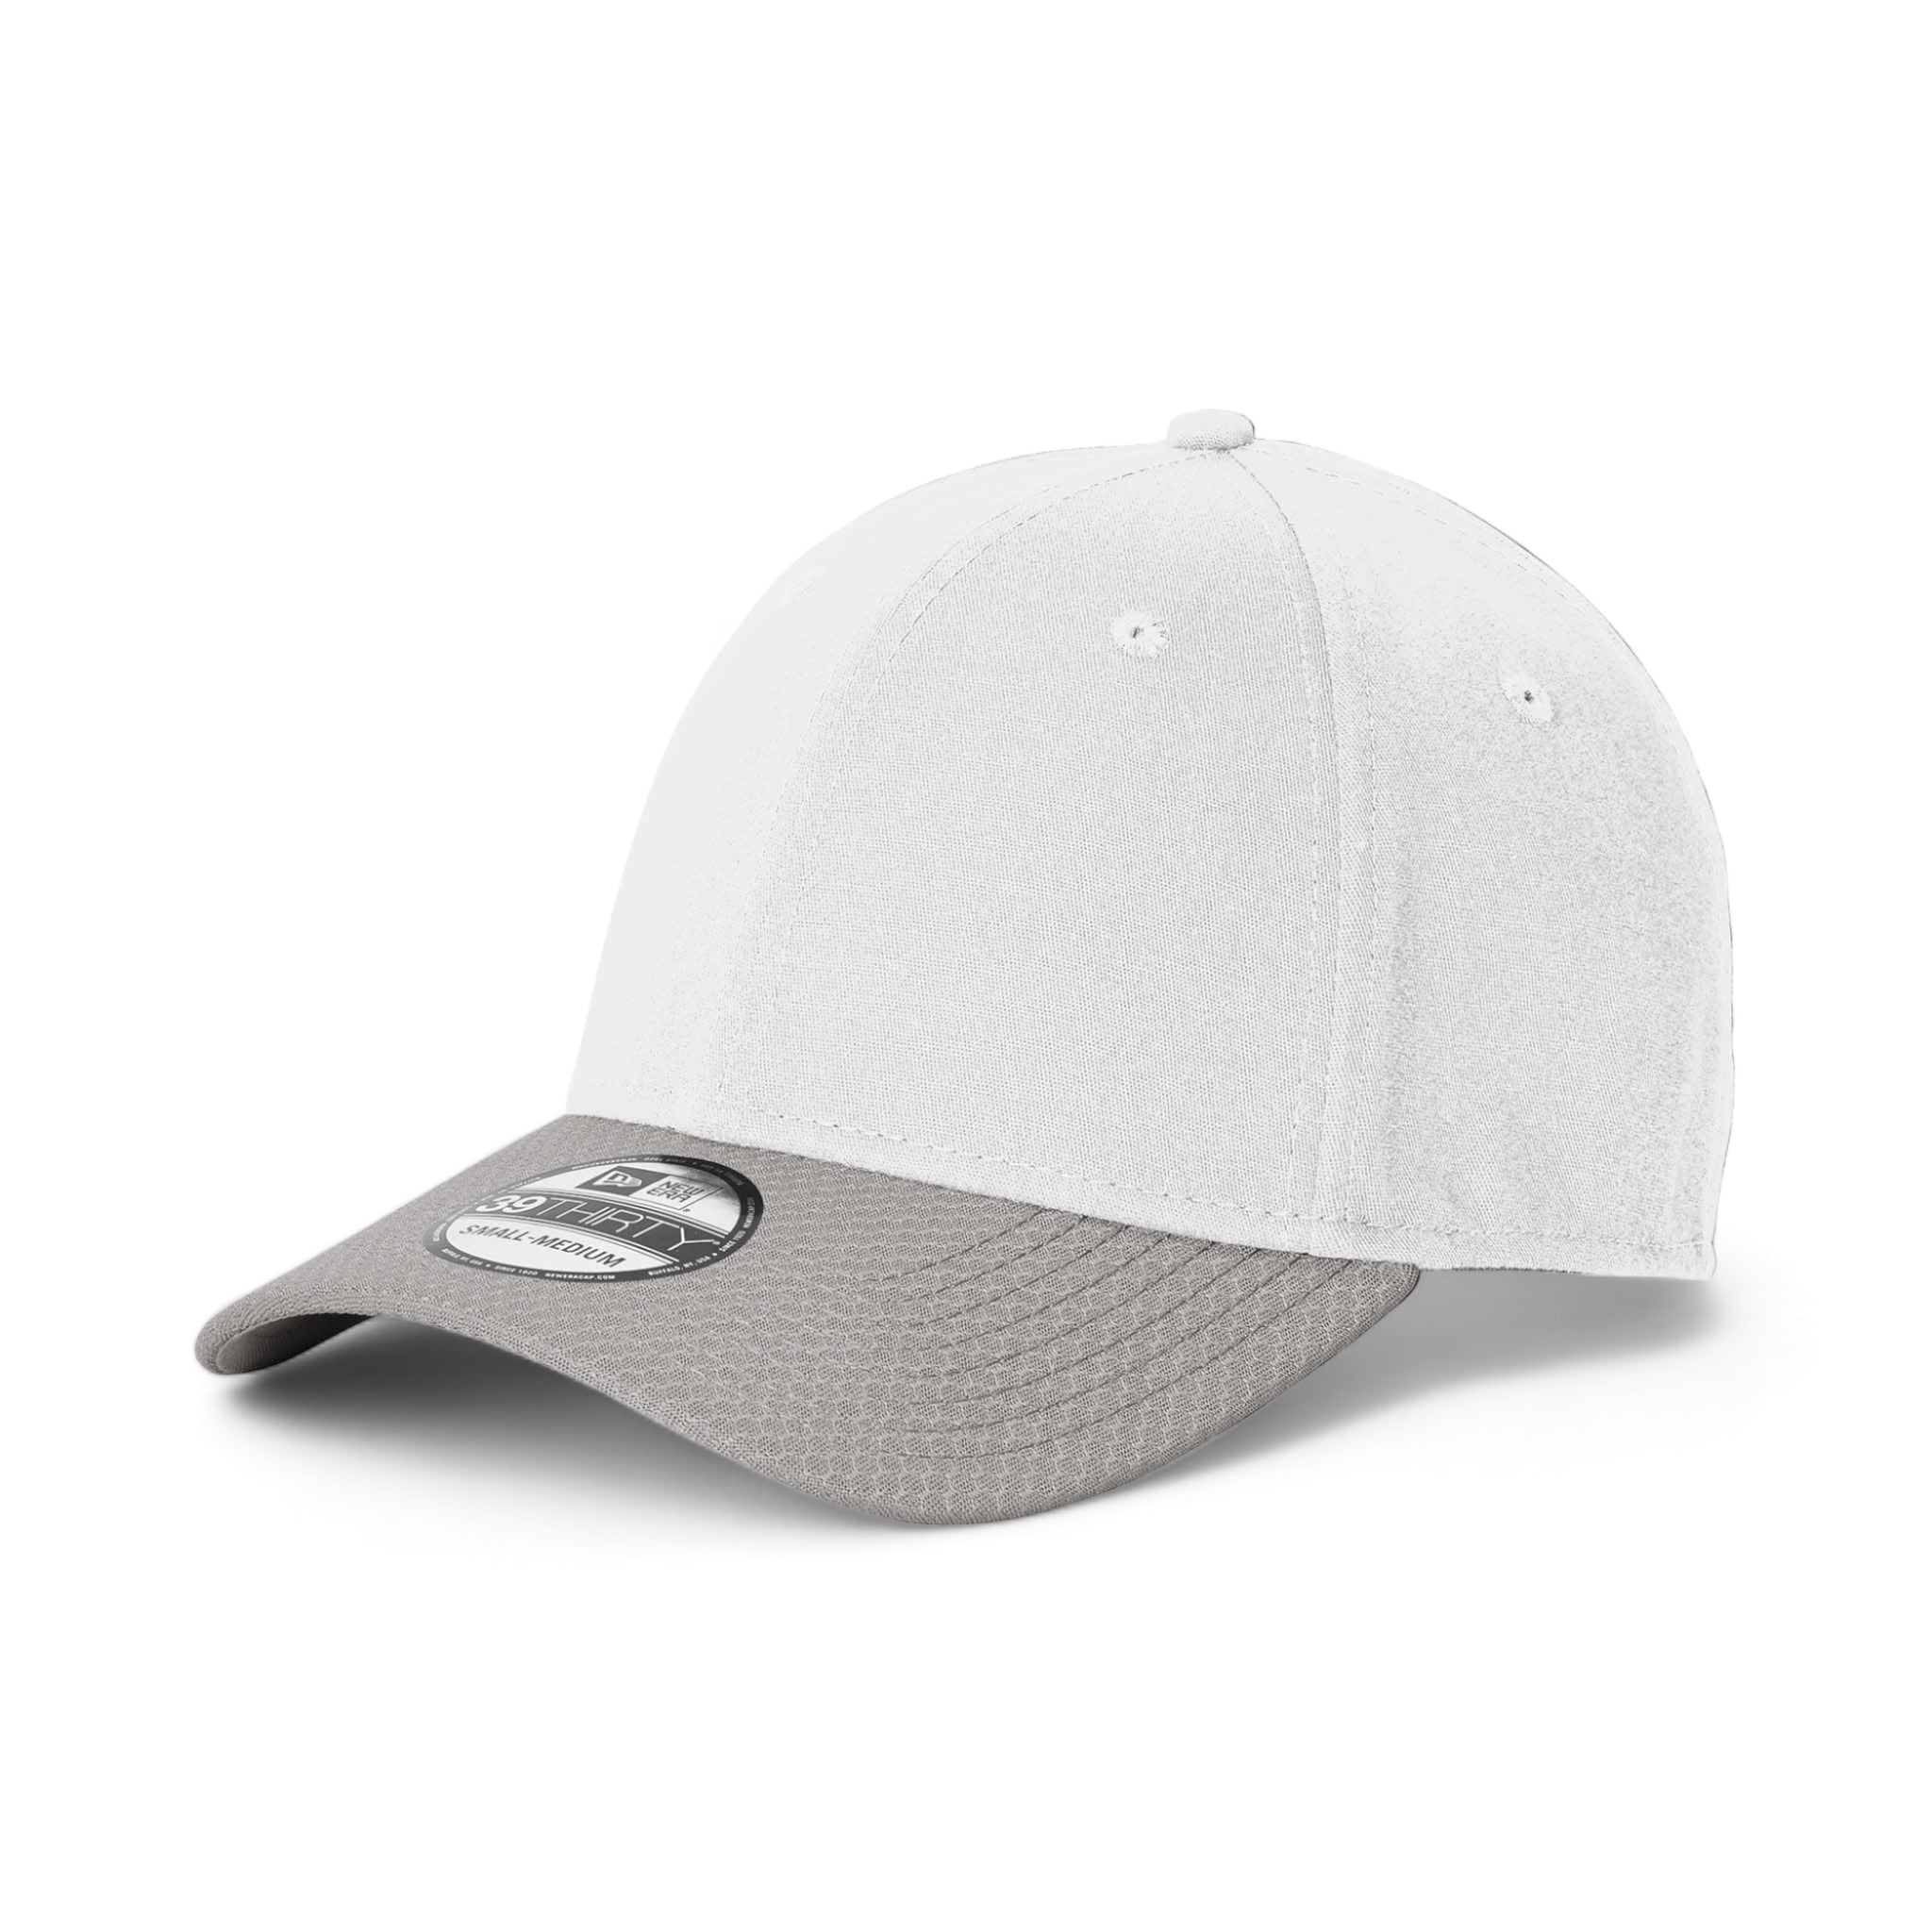 Side view of New Era NE1122 custom hat in white and grey